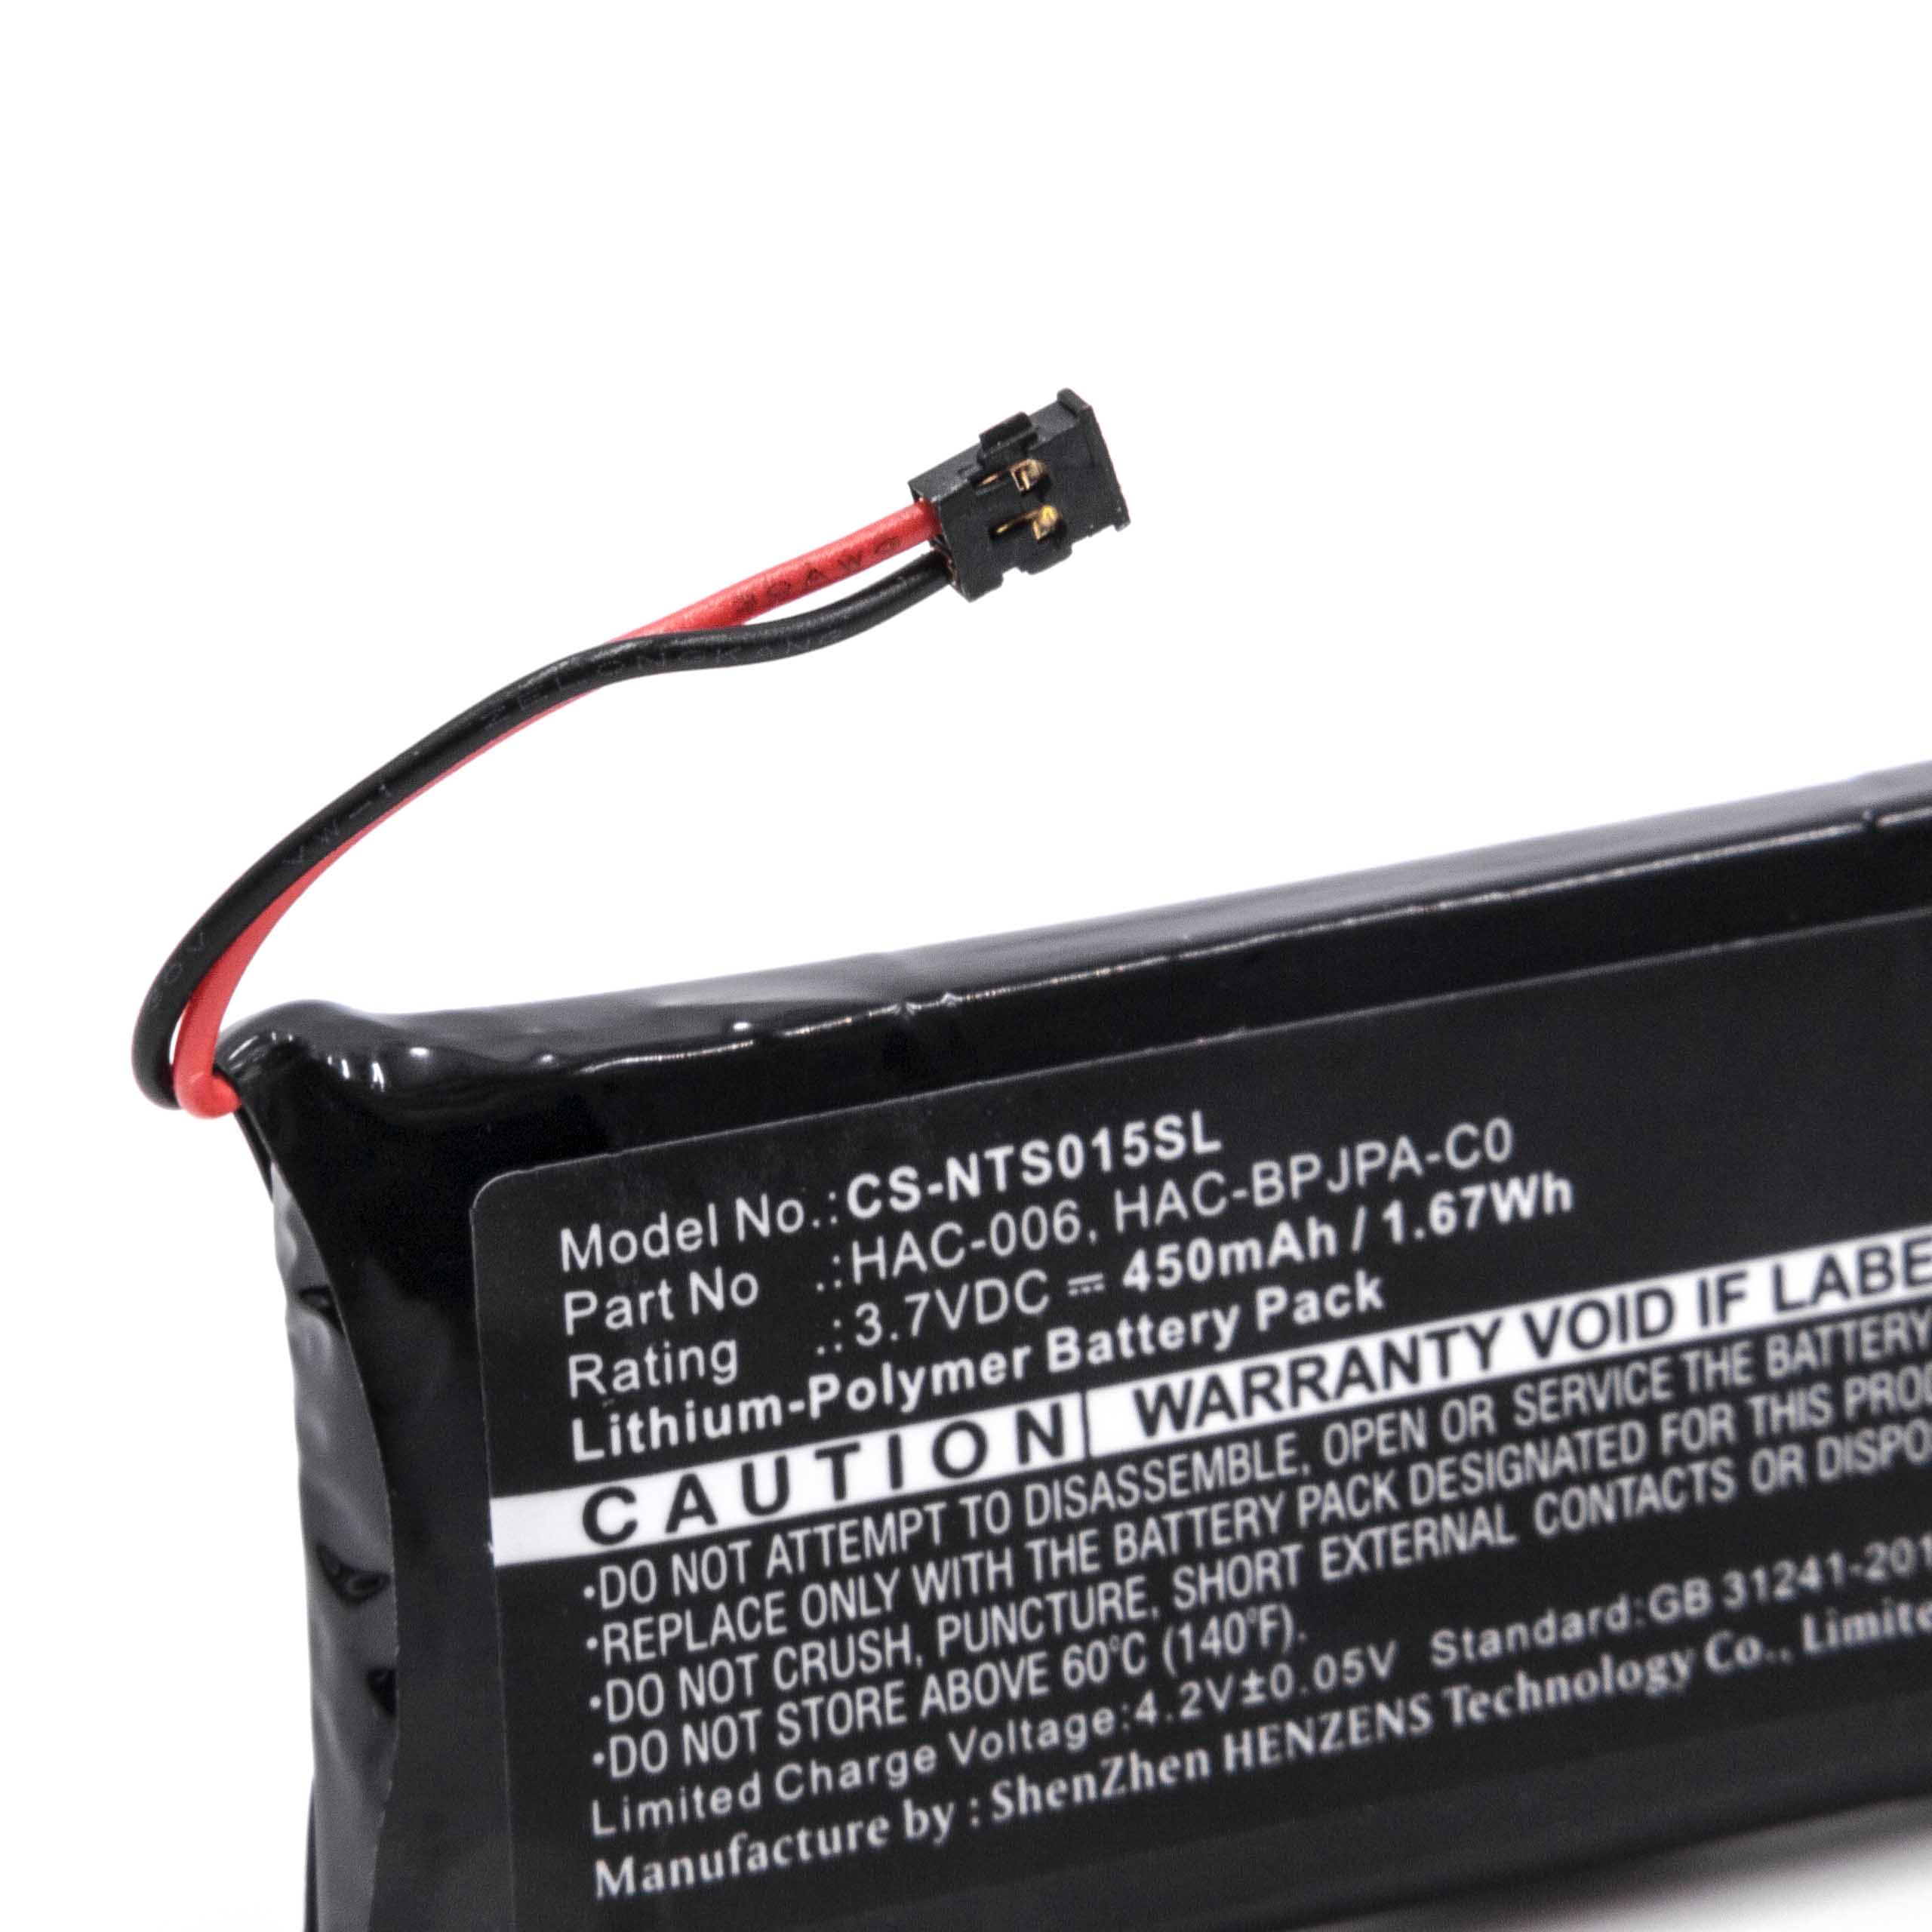 Akumulator do pada Nintendo zamiennik Nintendo HAC-BPJPA-C0, HAC-006 - 450 mAh, 3,7 V